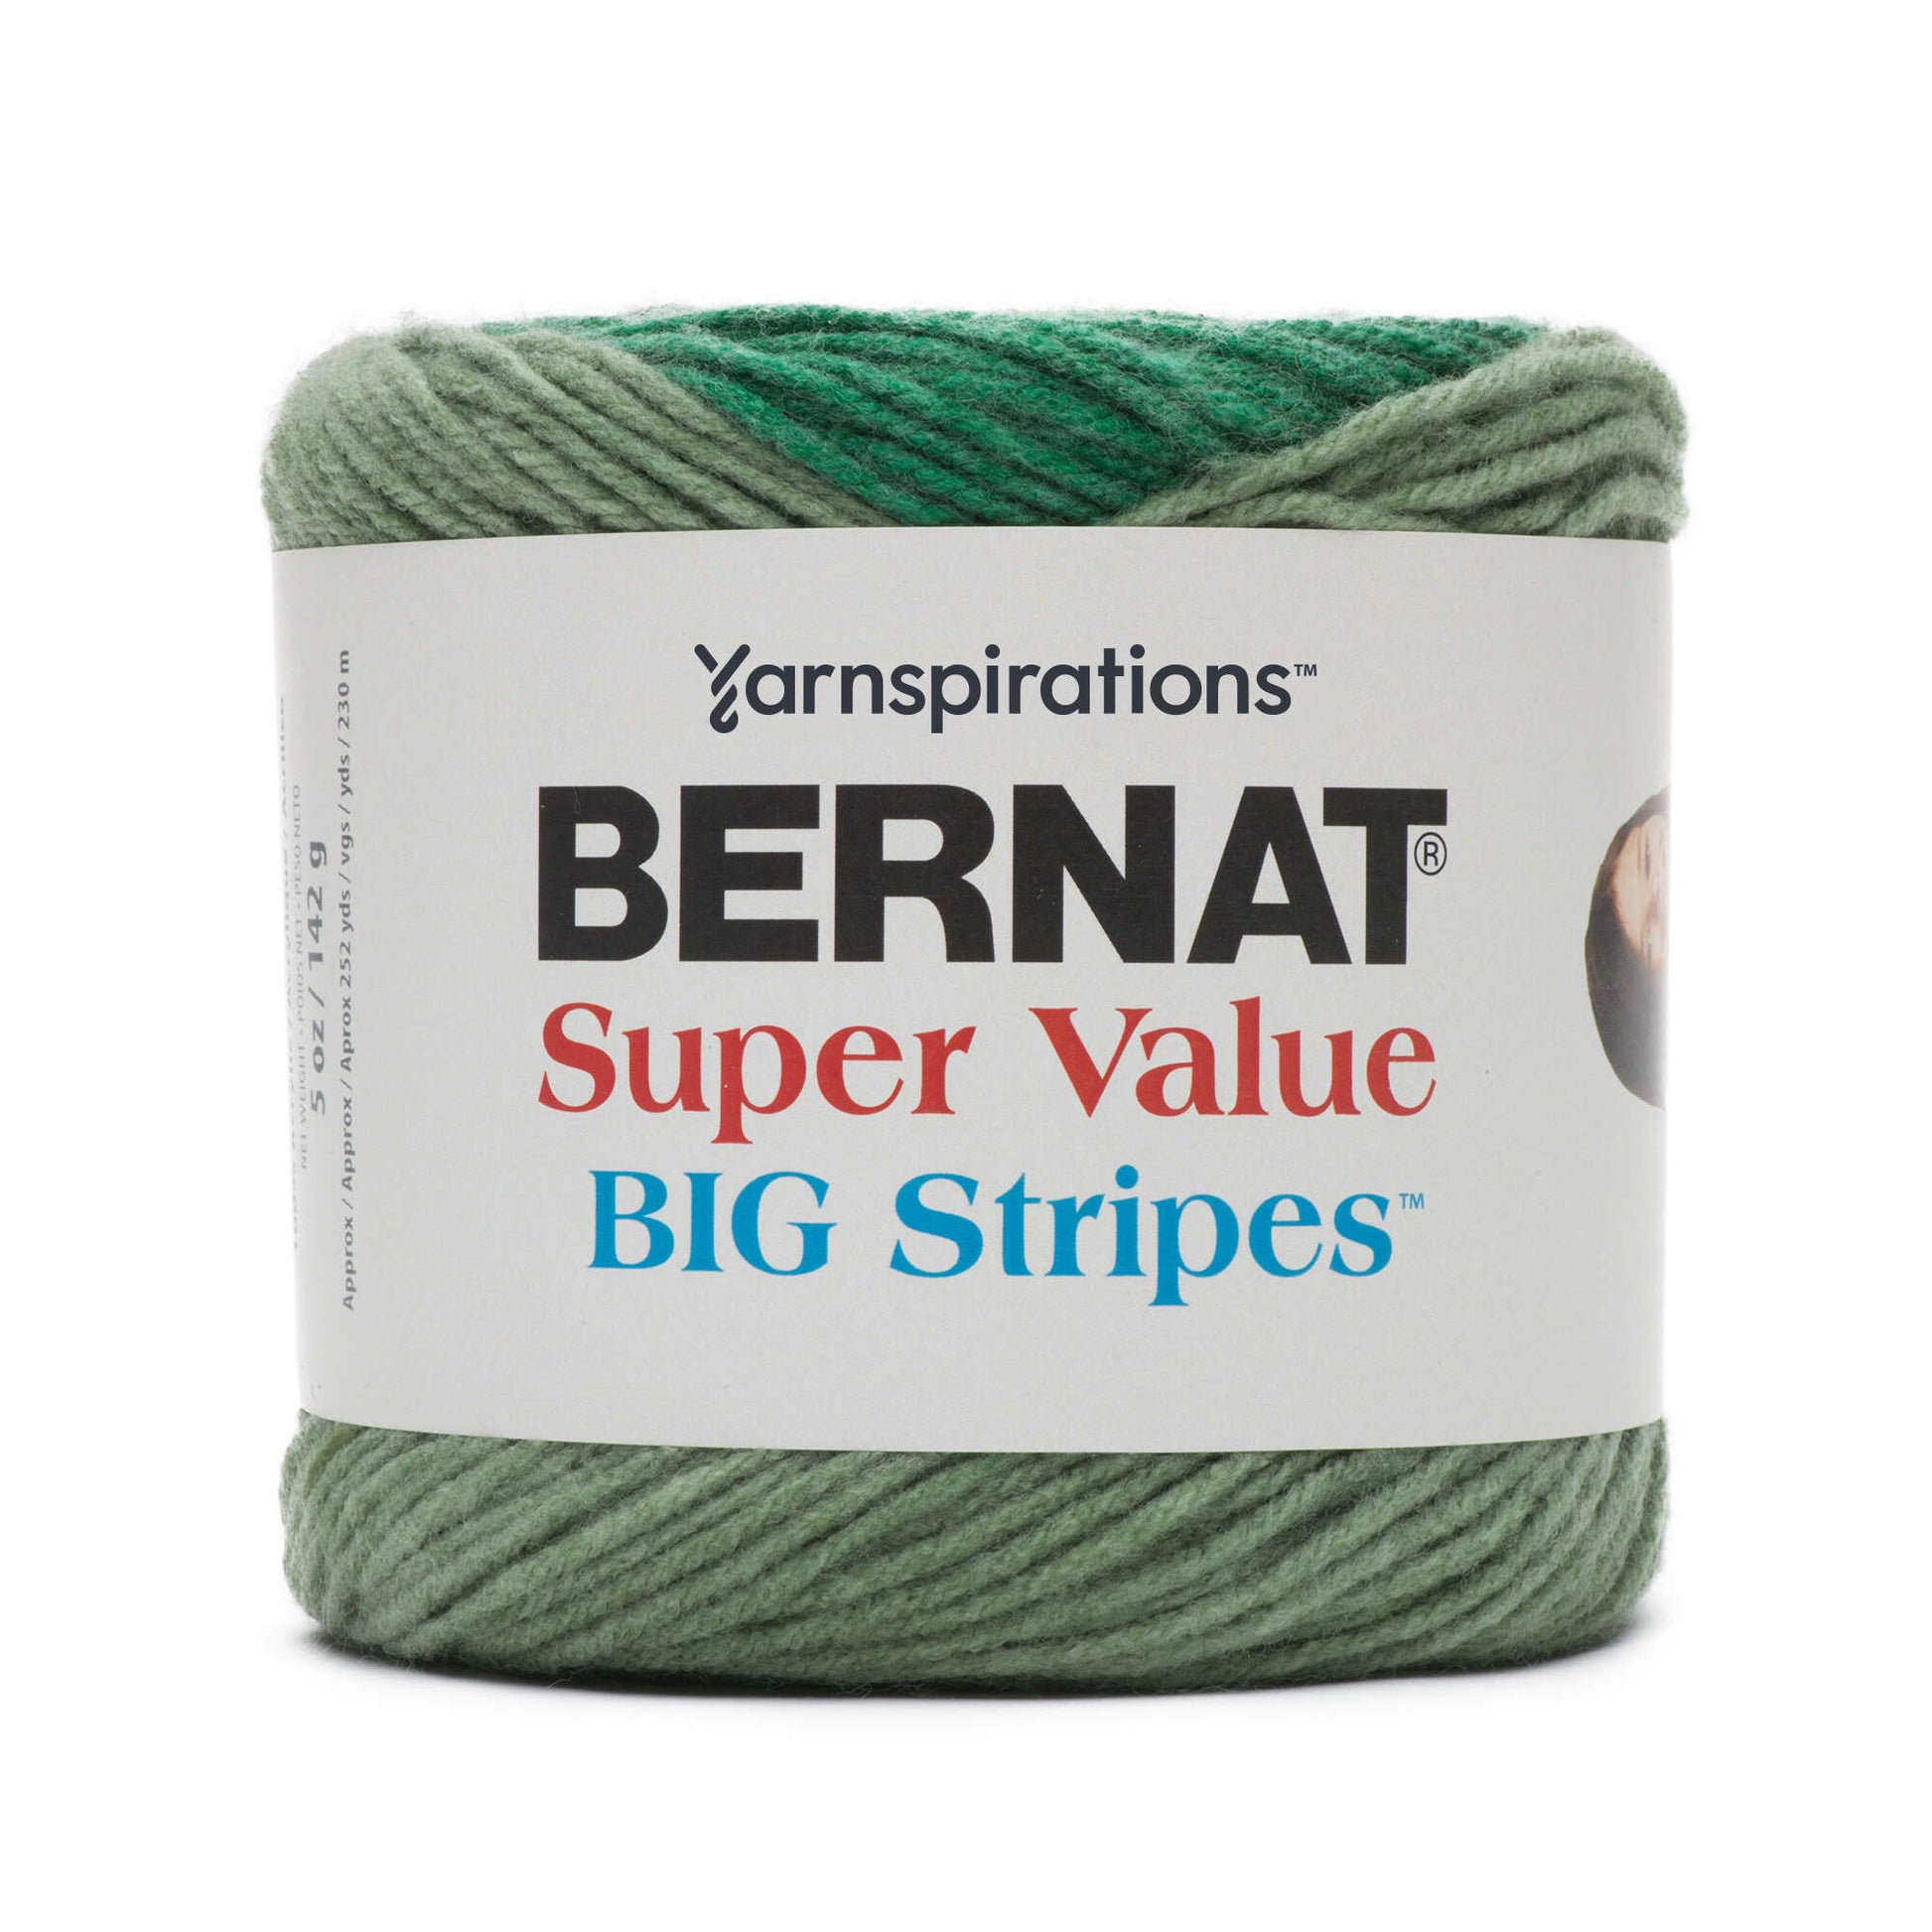 Bernat Super Value Big Stripes Yarn - Discontinued Shades Cactus Field